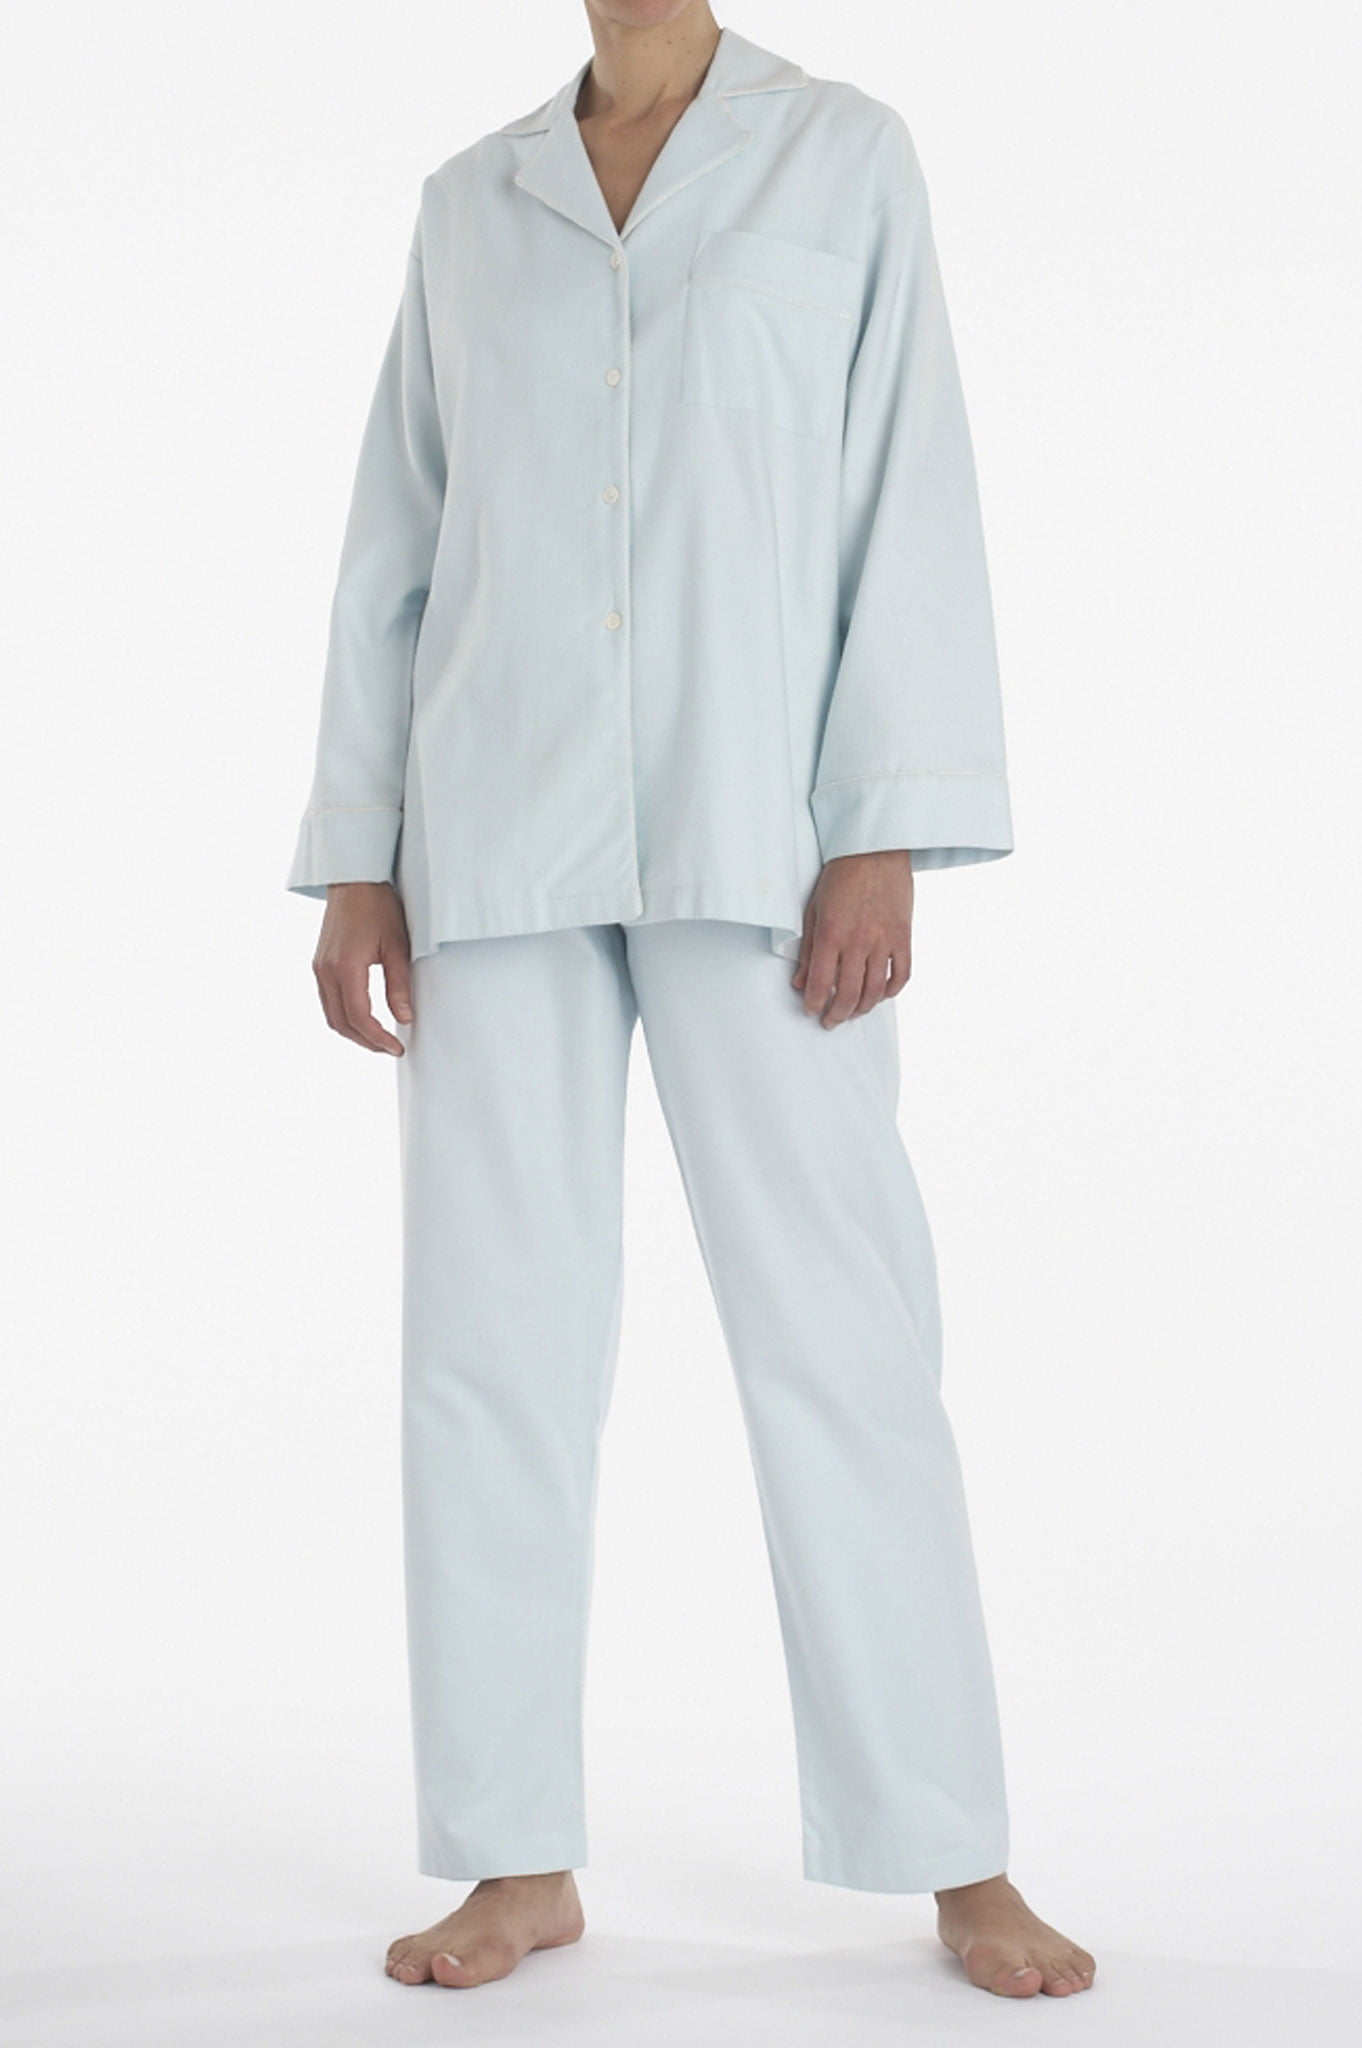 LazyOne Pajamas for Women, Cute Pajama Pants and Top Separates, Crab, Large